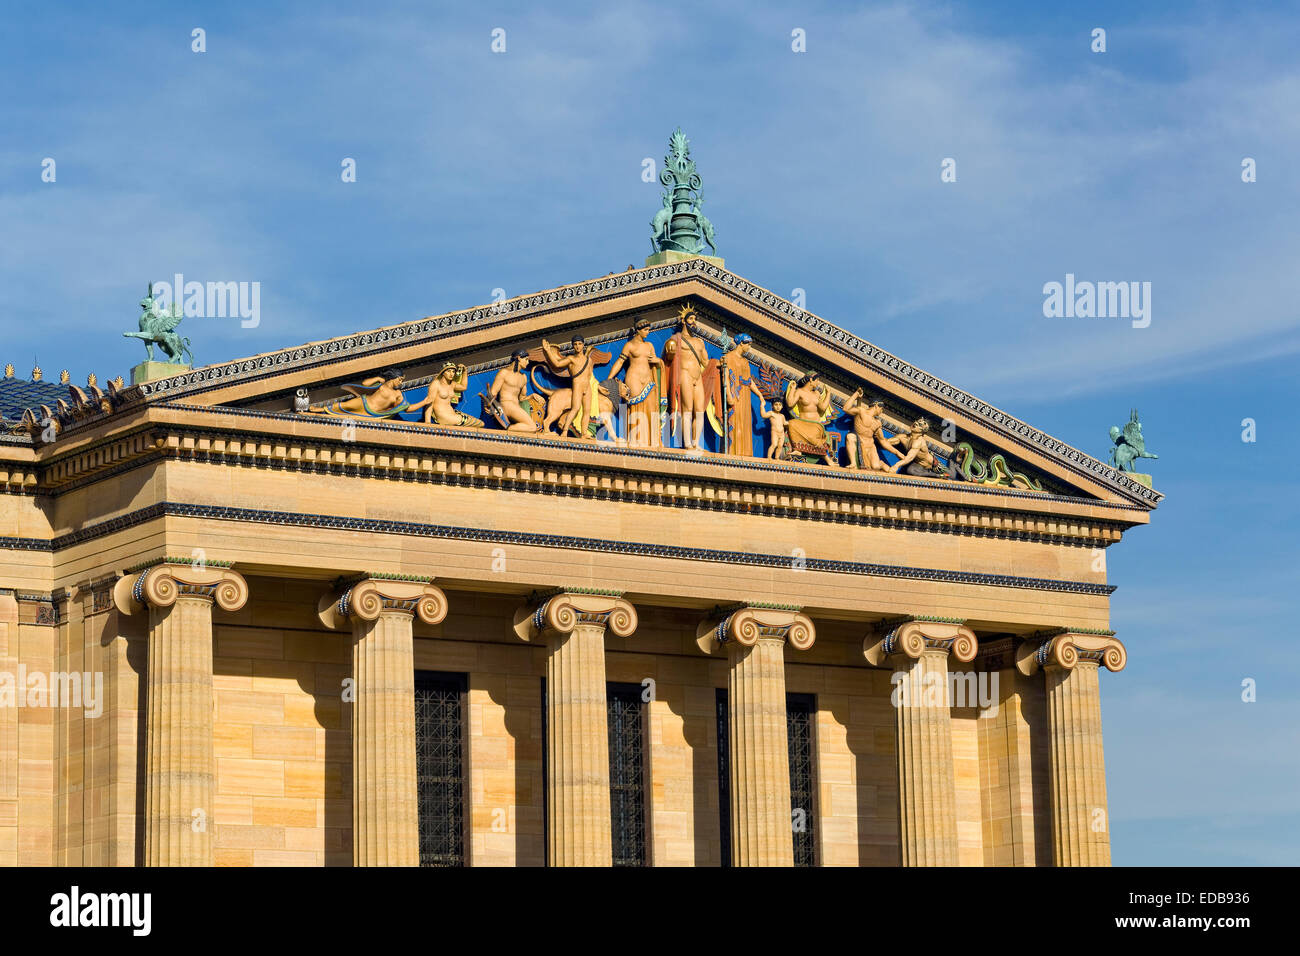 Philadelphia Museum of Art, dettagli architettonici su esterno dell'edificio, Philadelphia, Pennsylvania Foto Stock